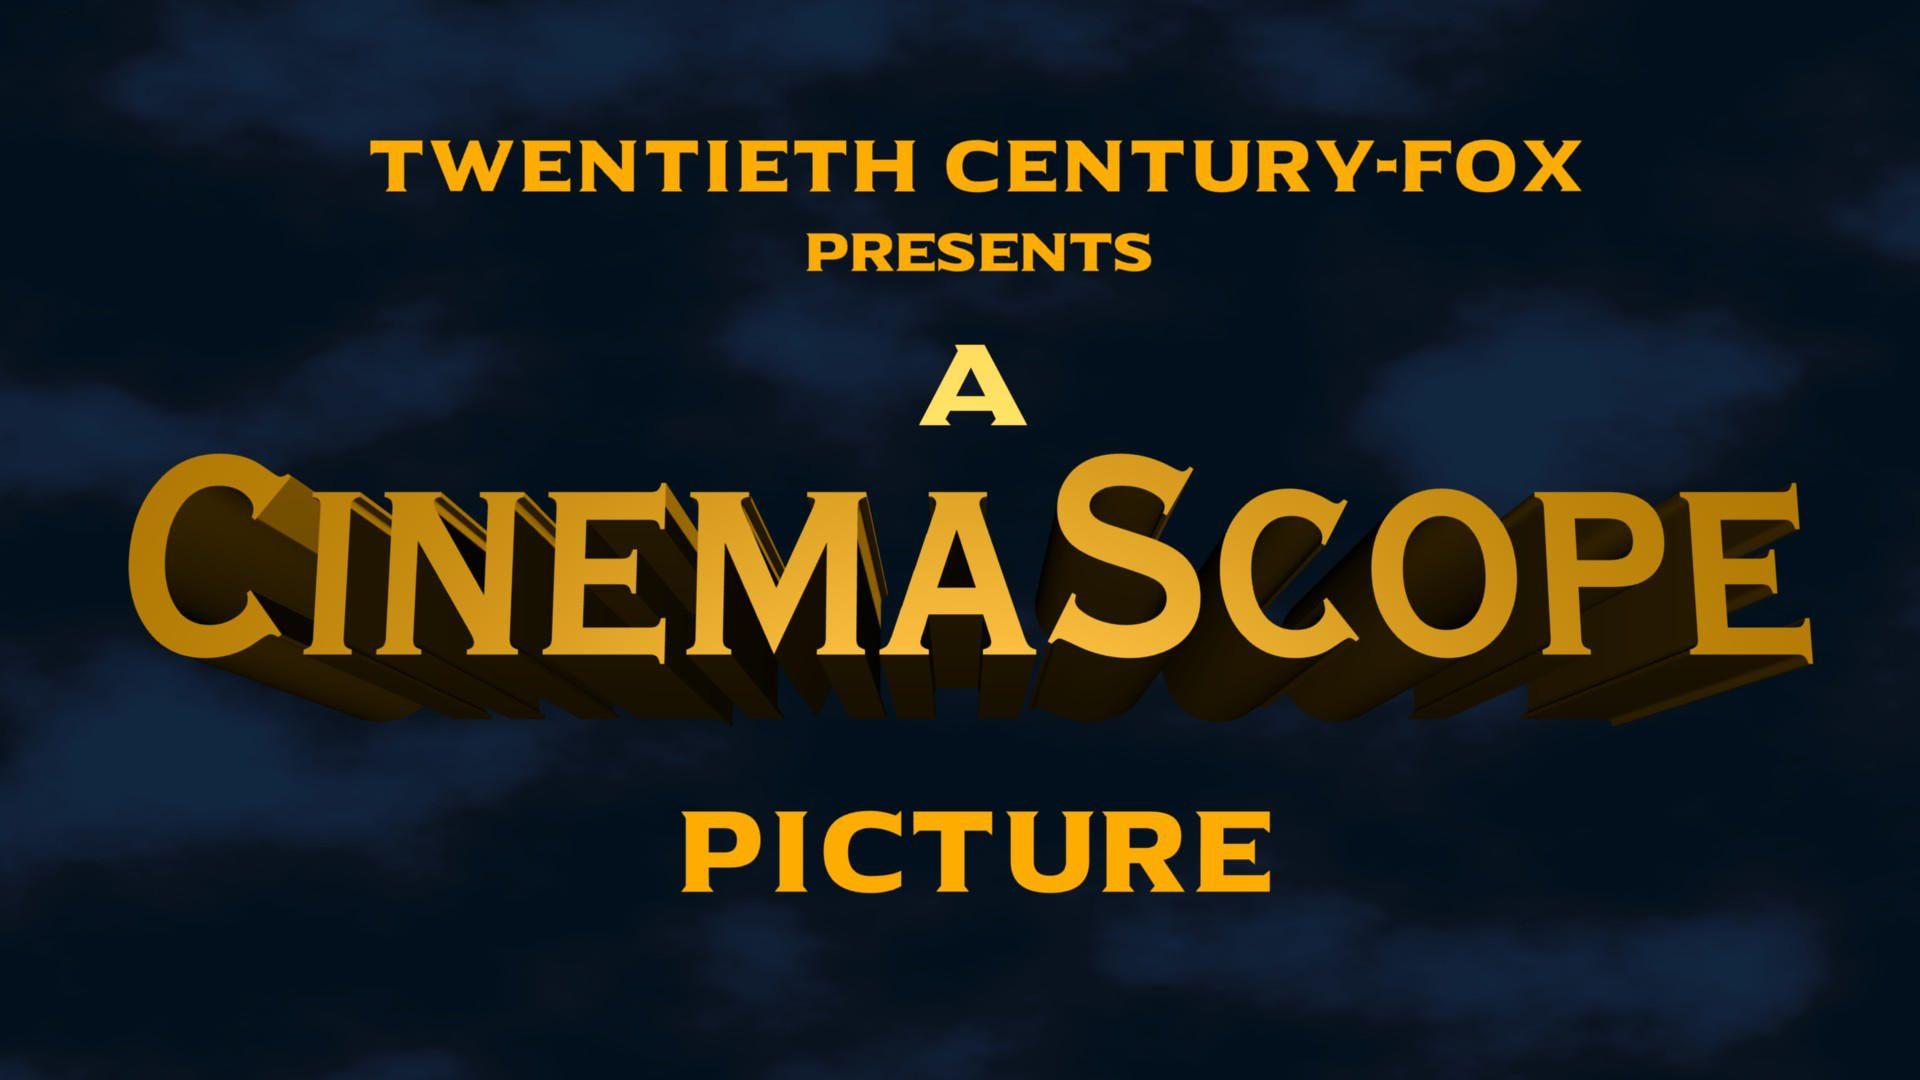 CinemaScope Logo - My edit on the 20th Century Fox CinemaScope logo